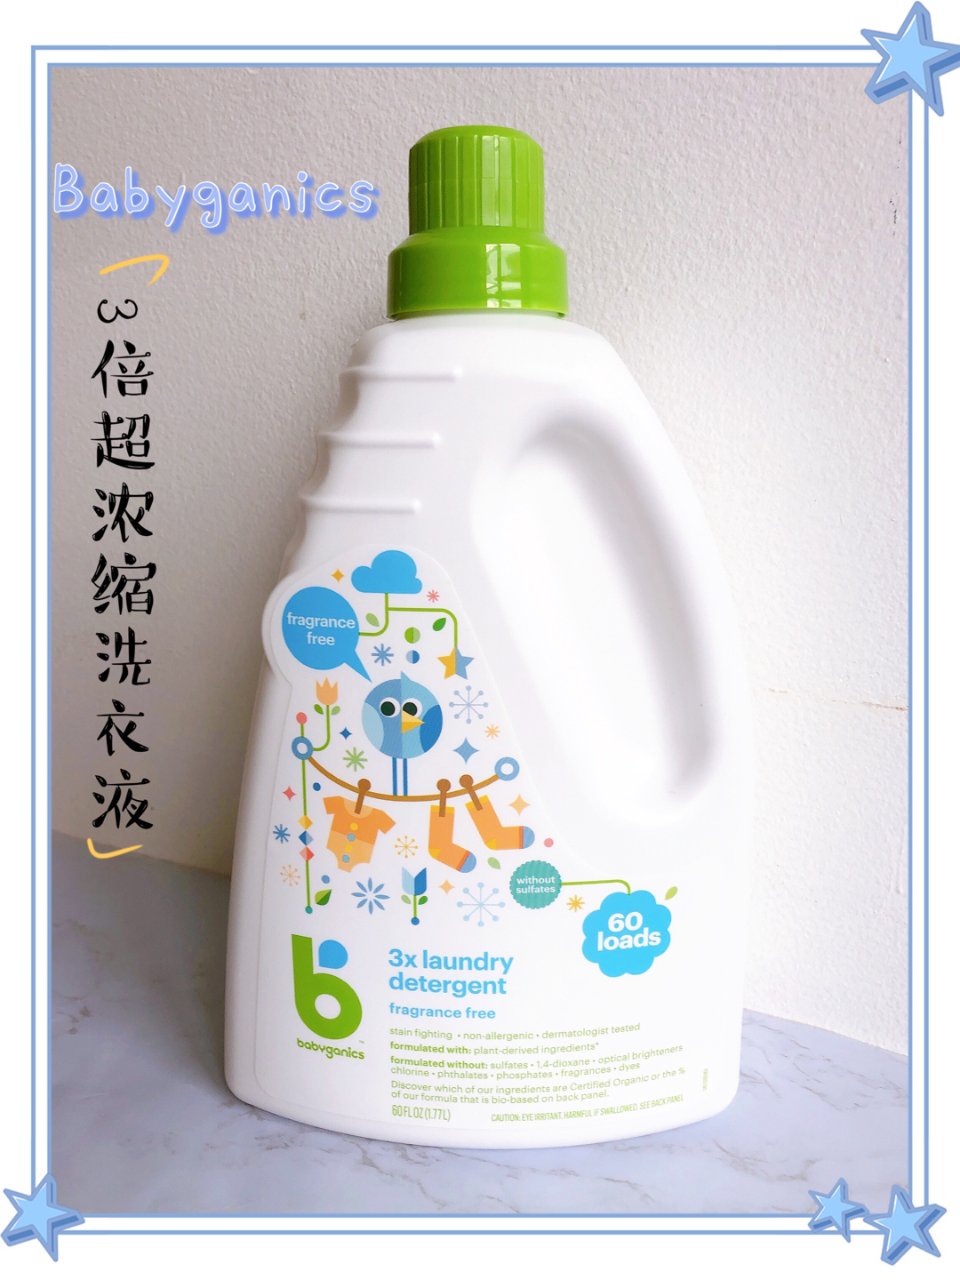 BabyGanics 甘尼克宝贝,Amazon 亚马逊,Amazon.com: Babyganics 3X Baby Laundry D